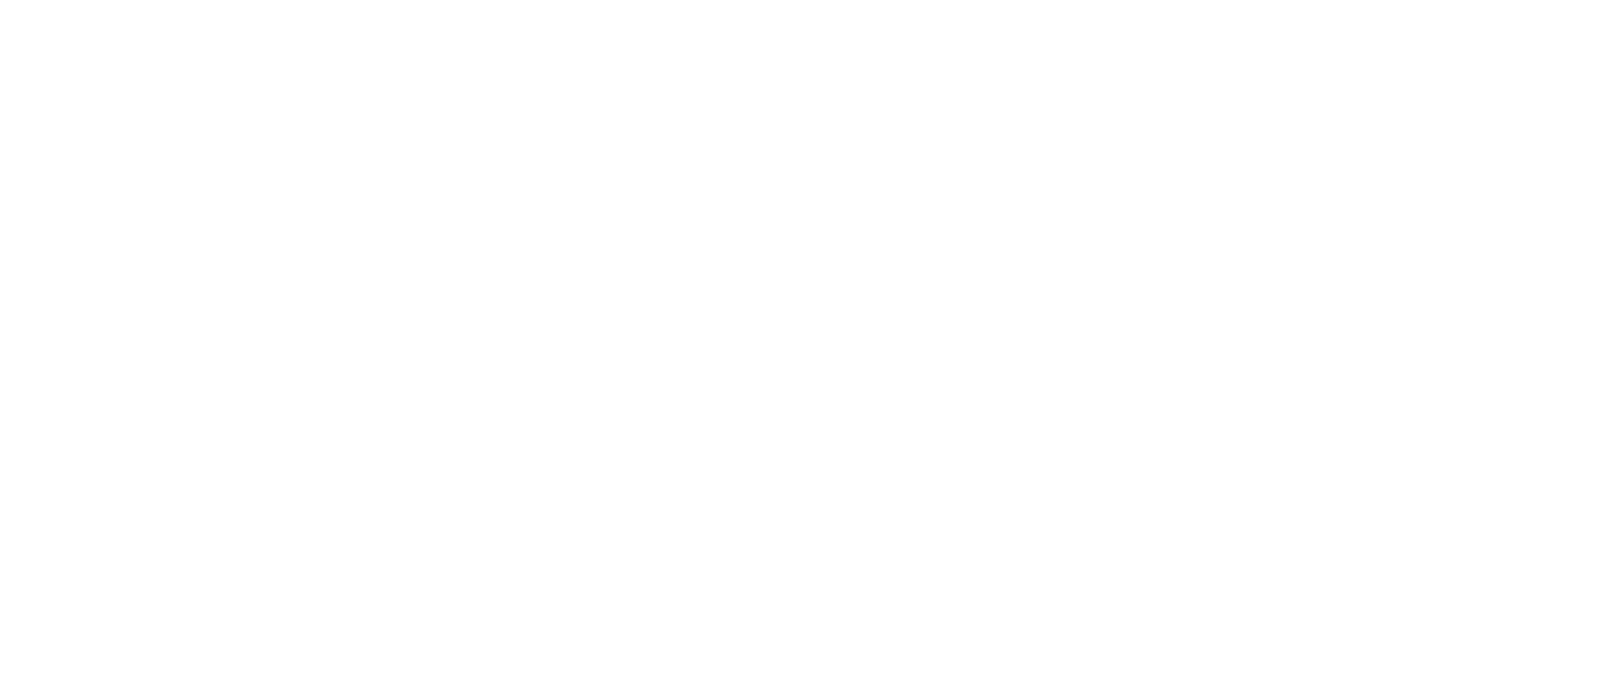 Academy Tennis Karachontzitis